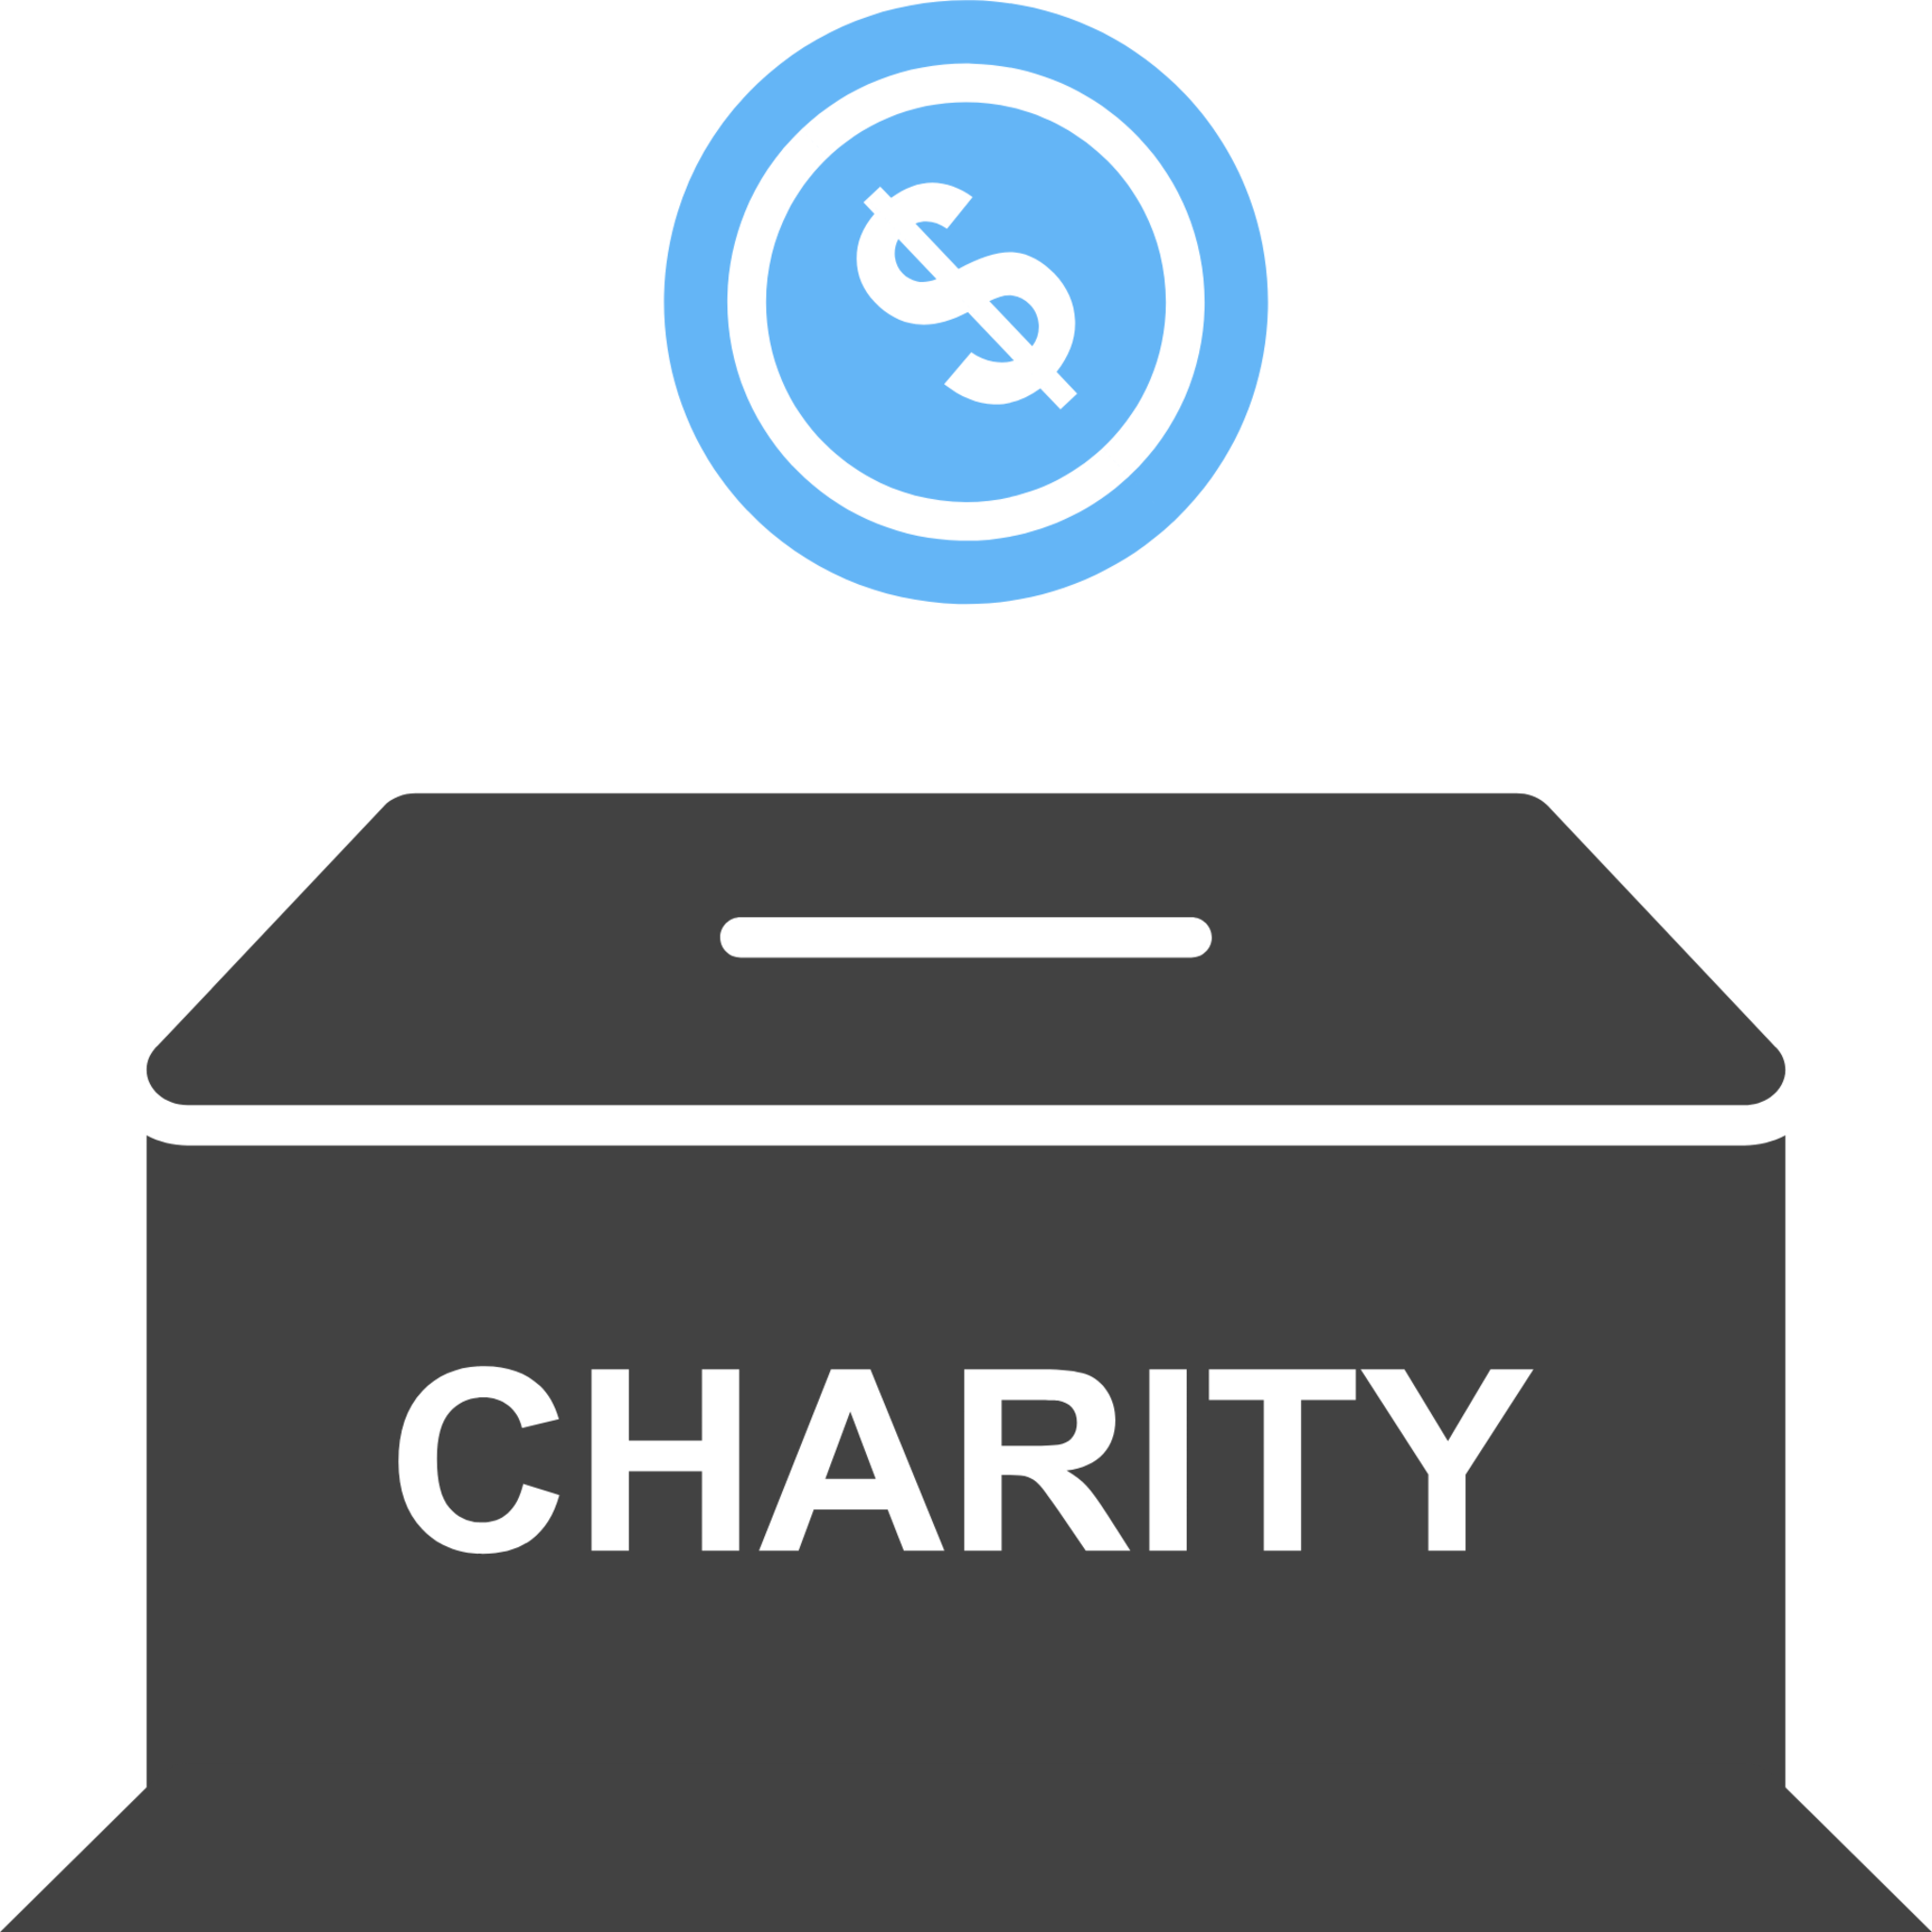 donation box icon